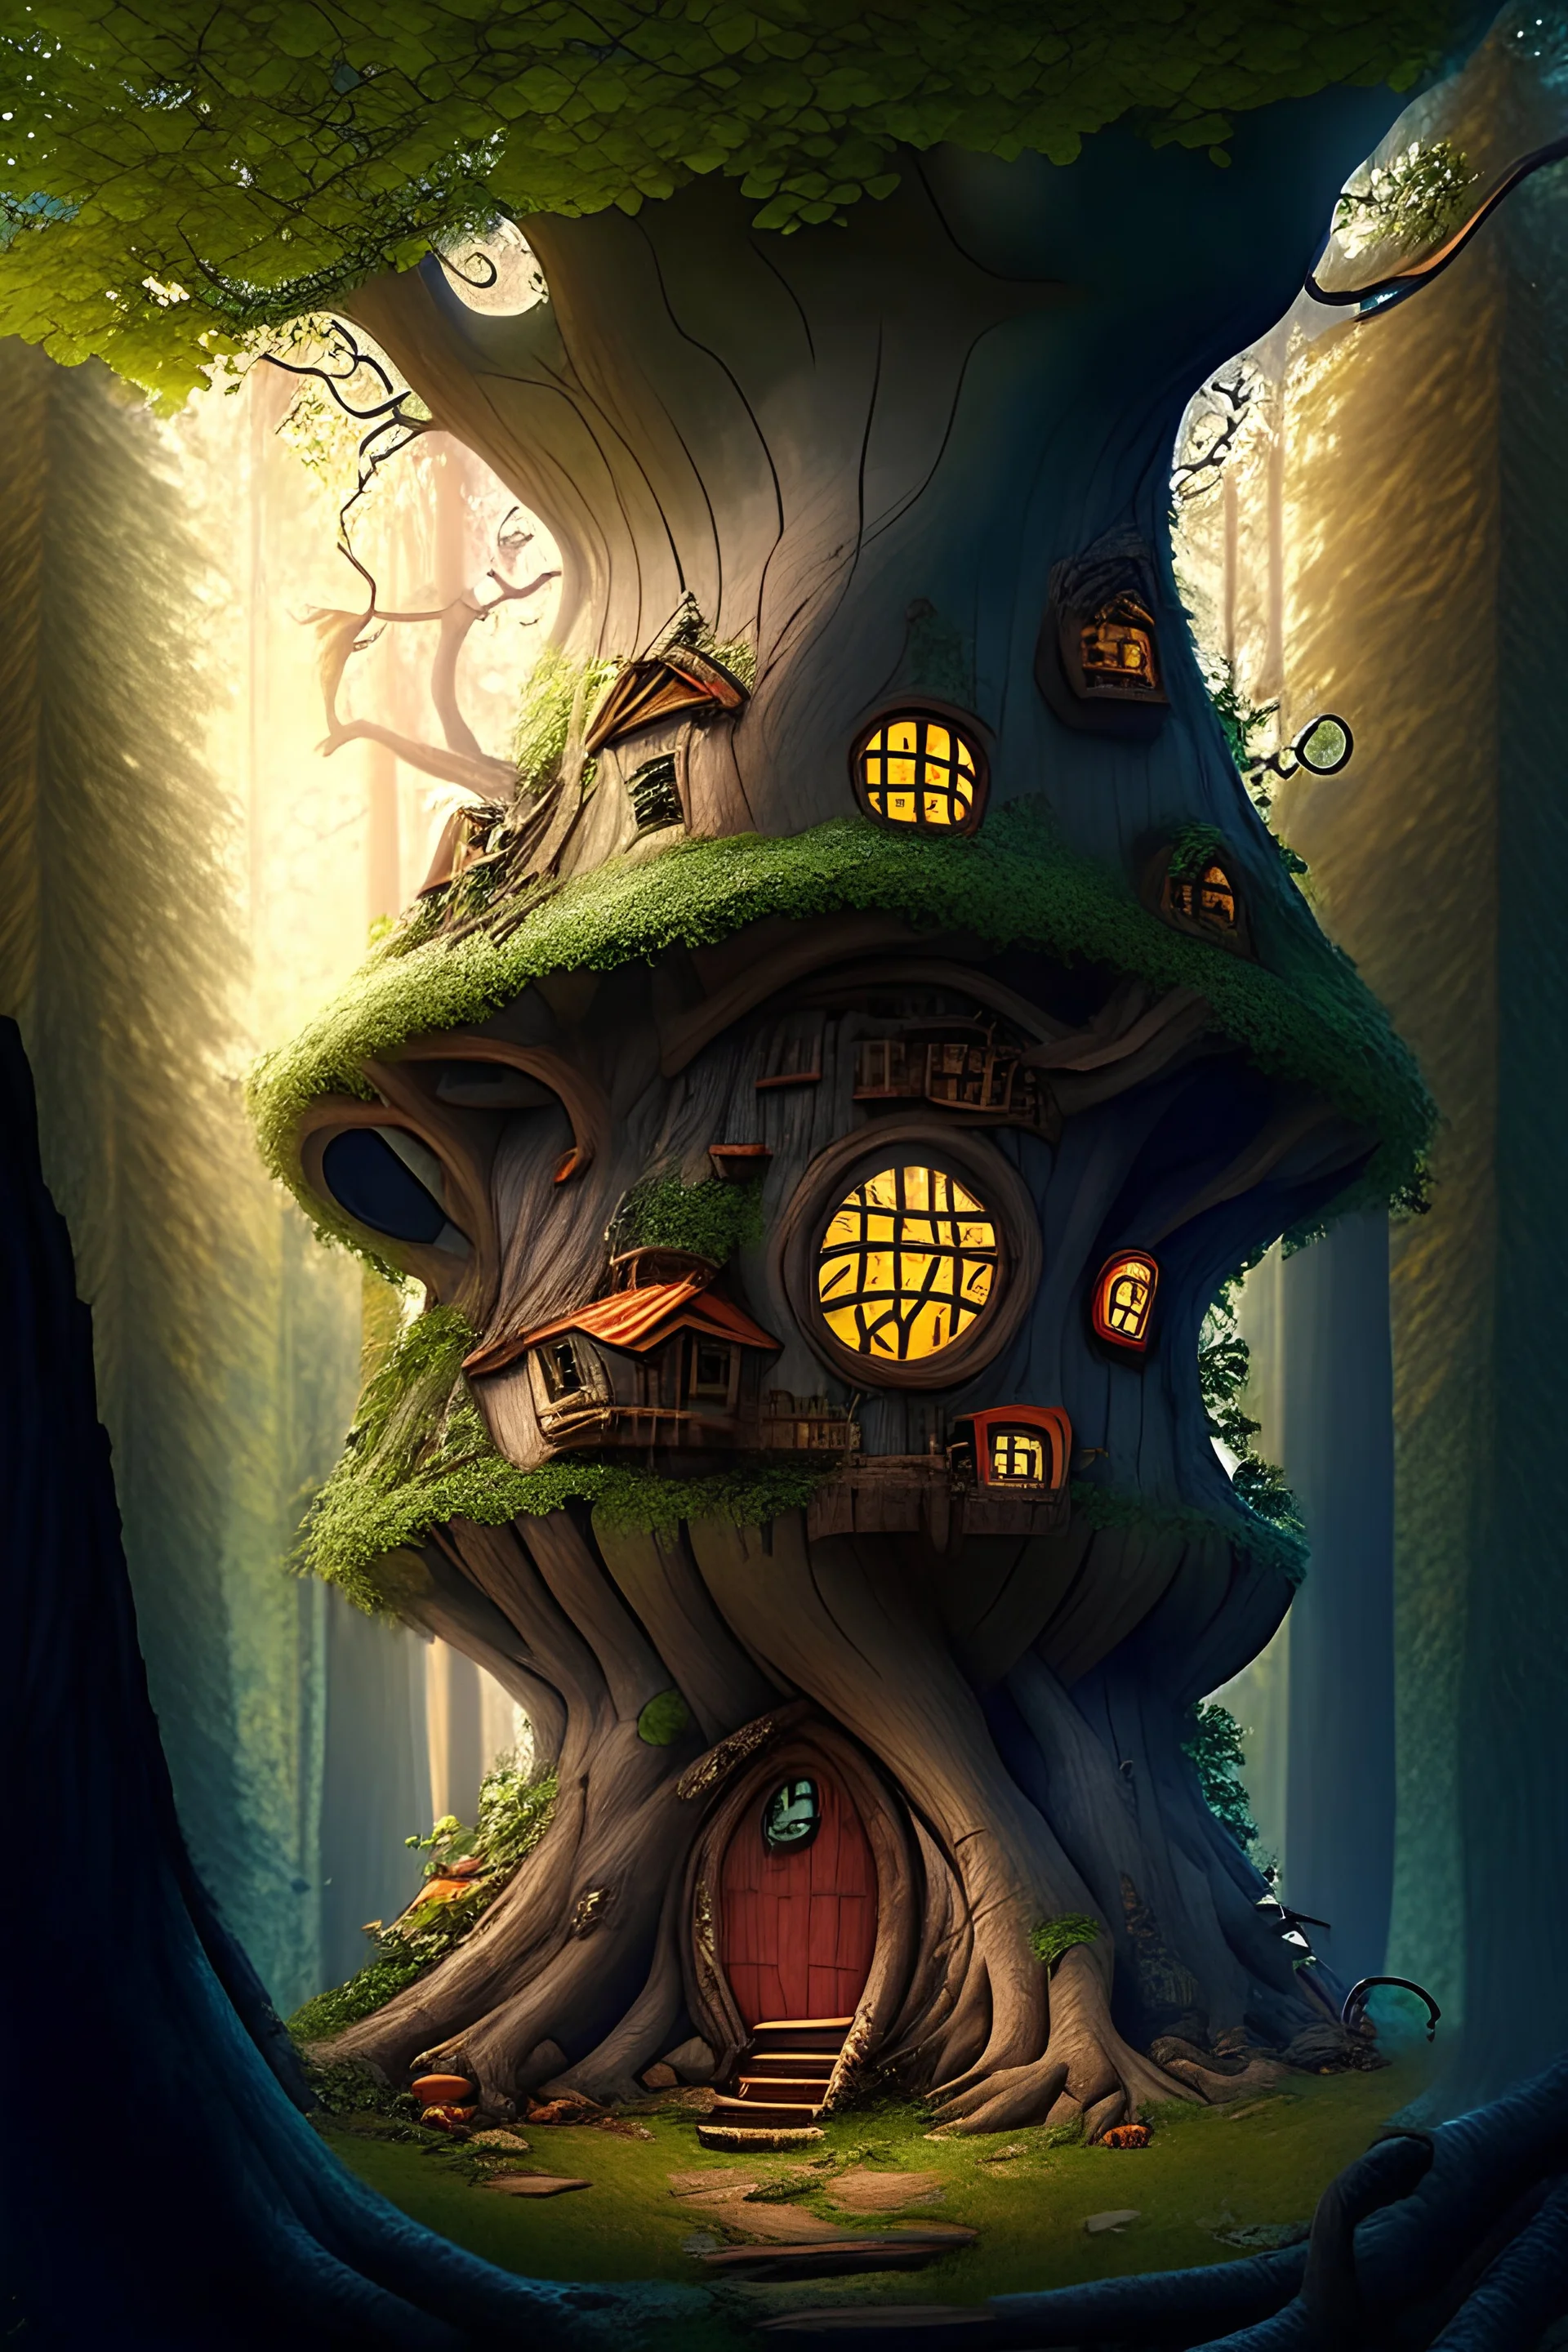 Rumah kurcaci di pohon besar ditengah hutan pemrograman yang ceria